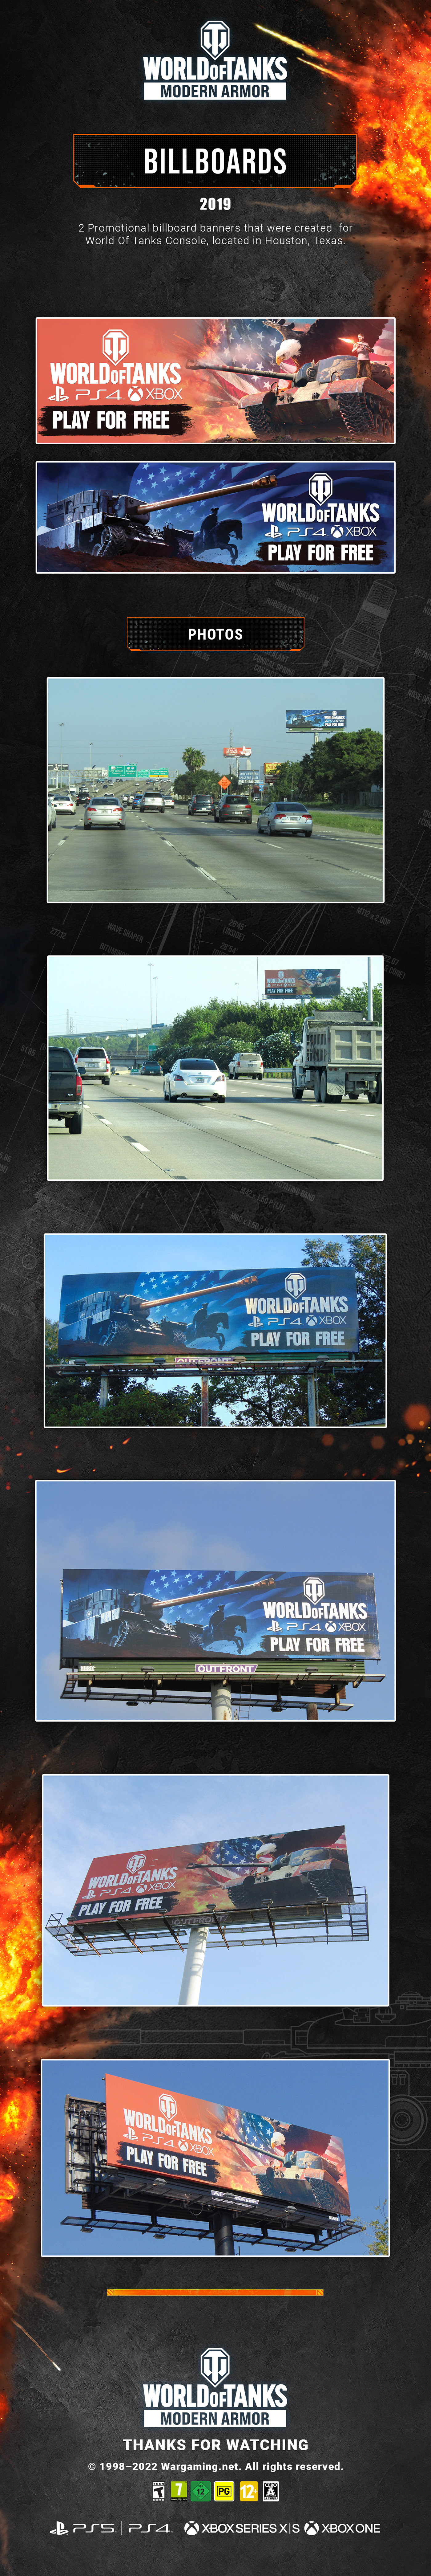 Advertising  billboard Brand awareness Houston Texas peter stylianou petesakedesigns wargaming world of tanks WotC